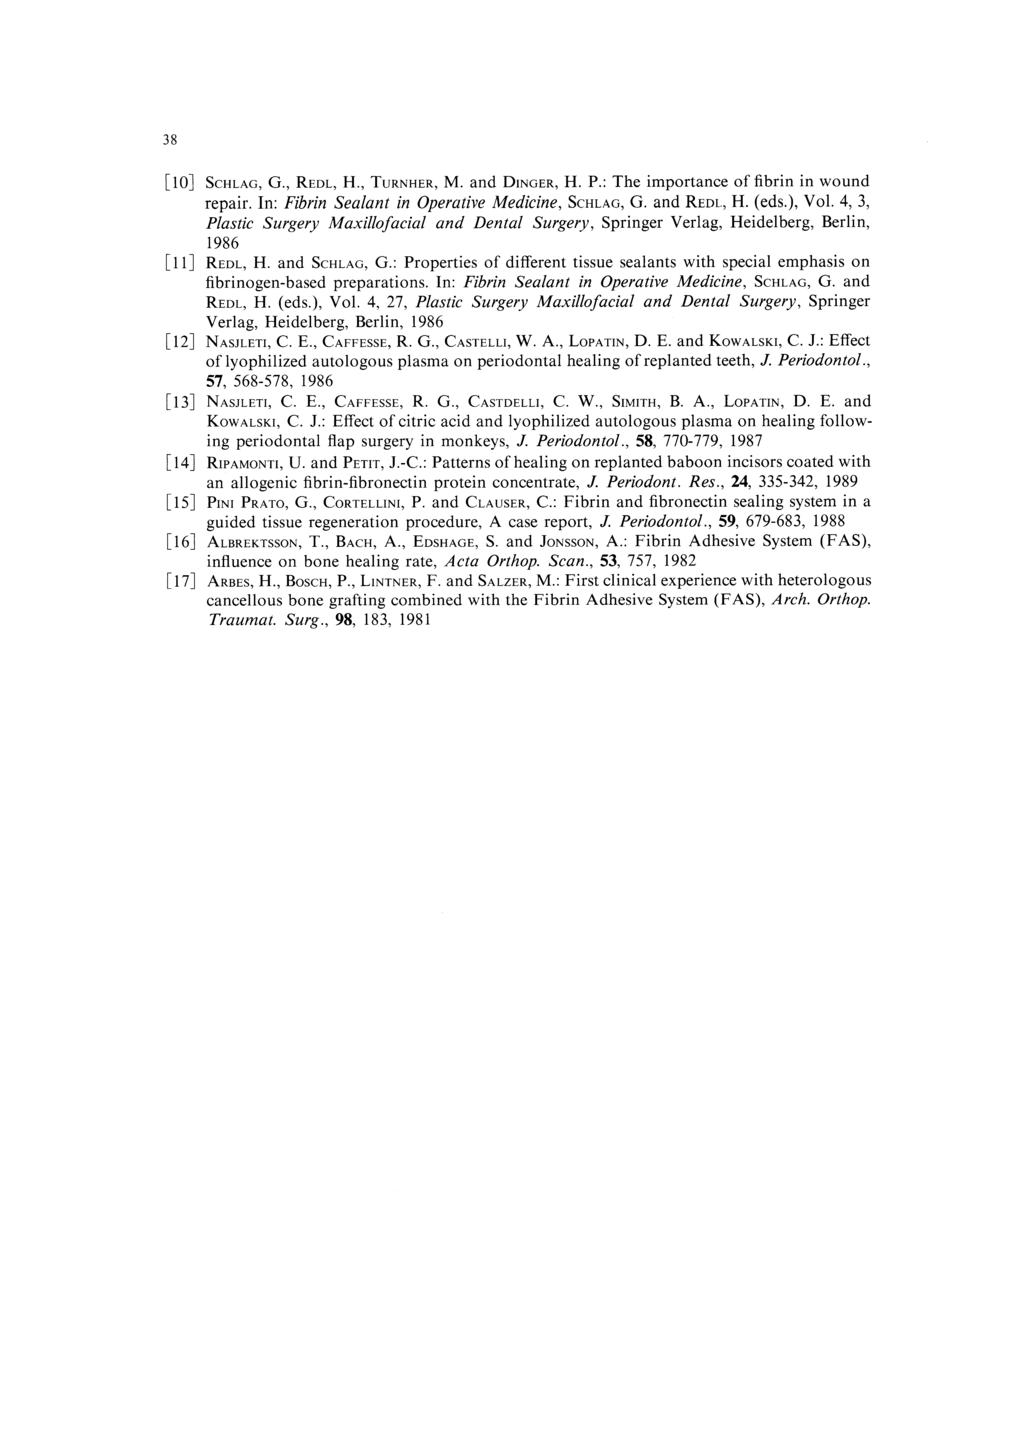 [10] SCHLAG, G., REDL, H., TURNHER, M. nd DINGER, H. P.: The importnce of firin in wound repir. In: Firin Selnt in Opertive Medicine, SCHLAG, G. nd REDL, H. (eds.), Vol.